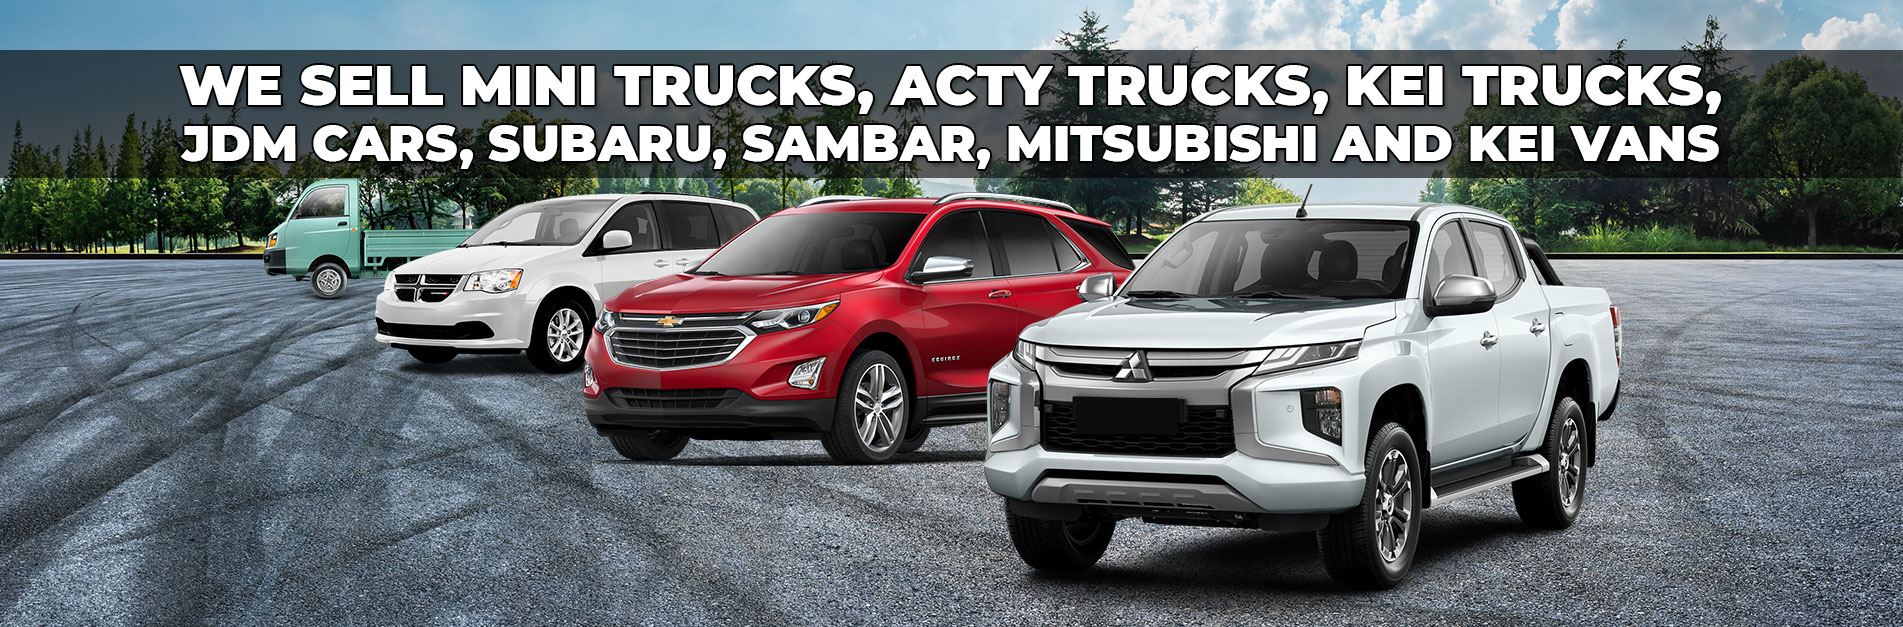 We Sell Mini trucks, Acty Trucks, Kei Trucks, JDM Cars, Subaru, Sambar, MITSUBISHI and Kei Vans